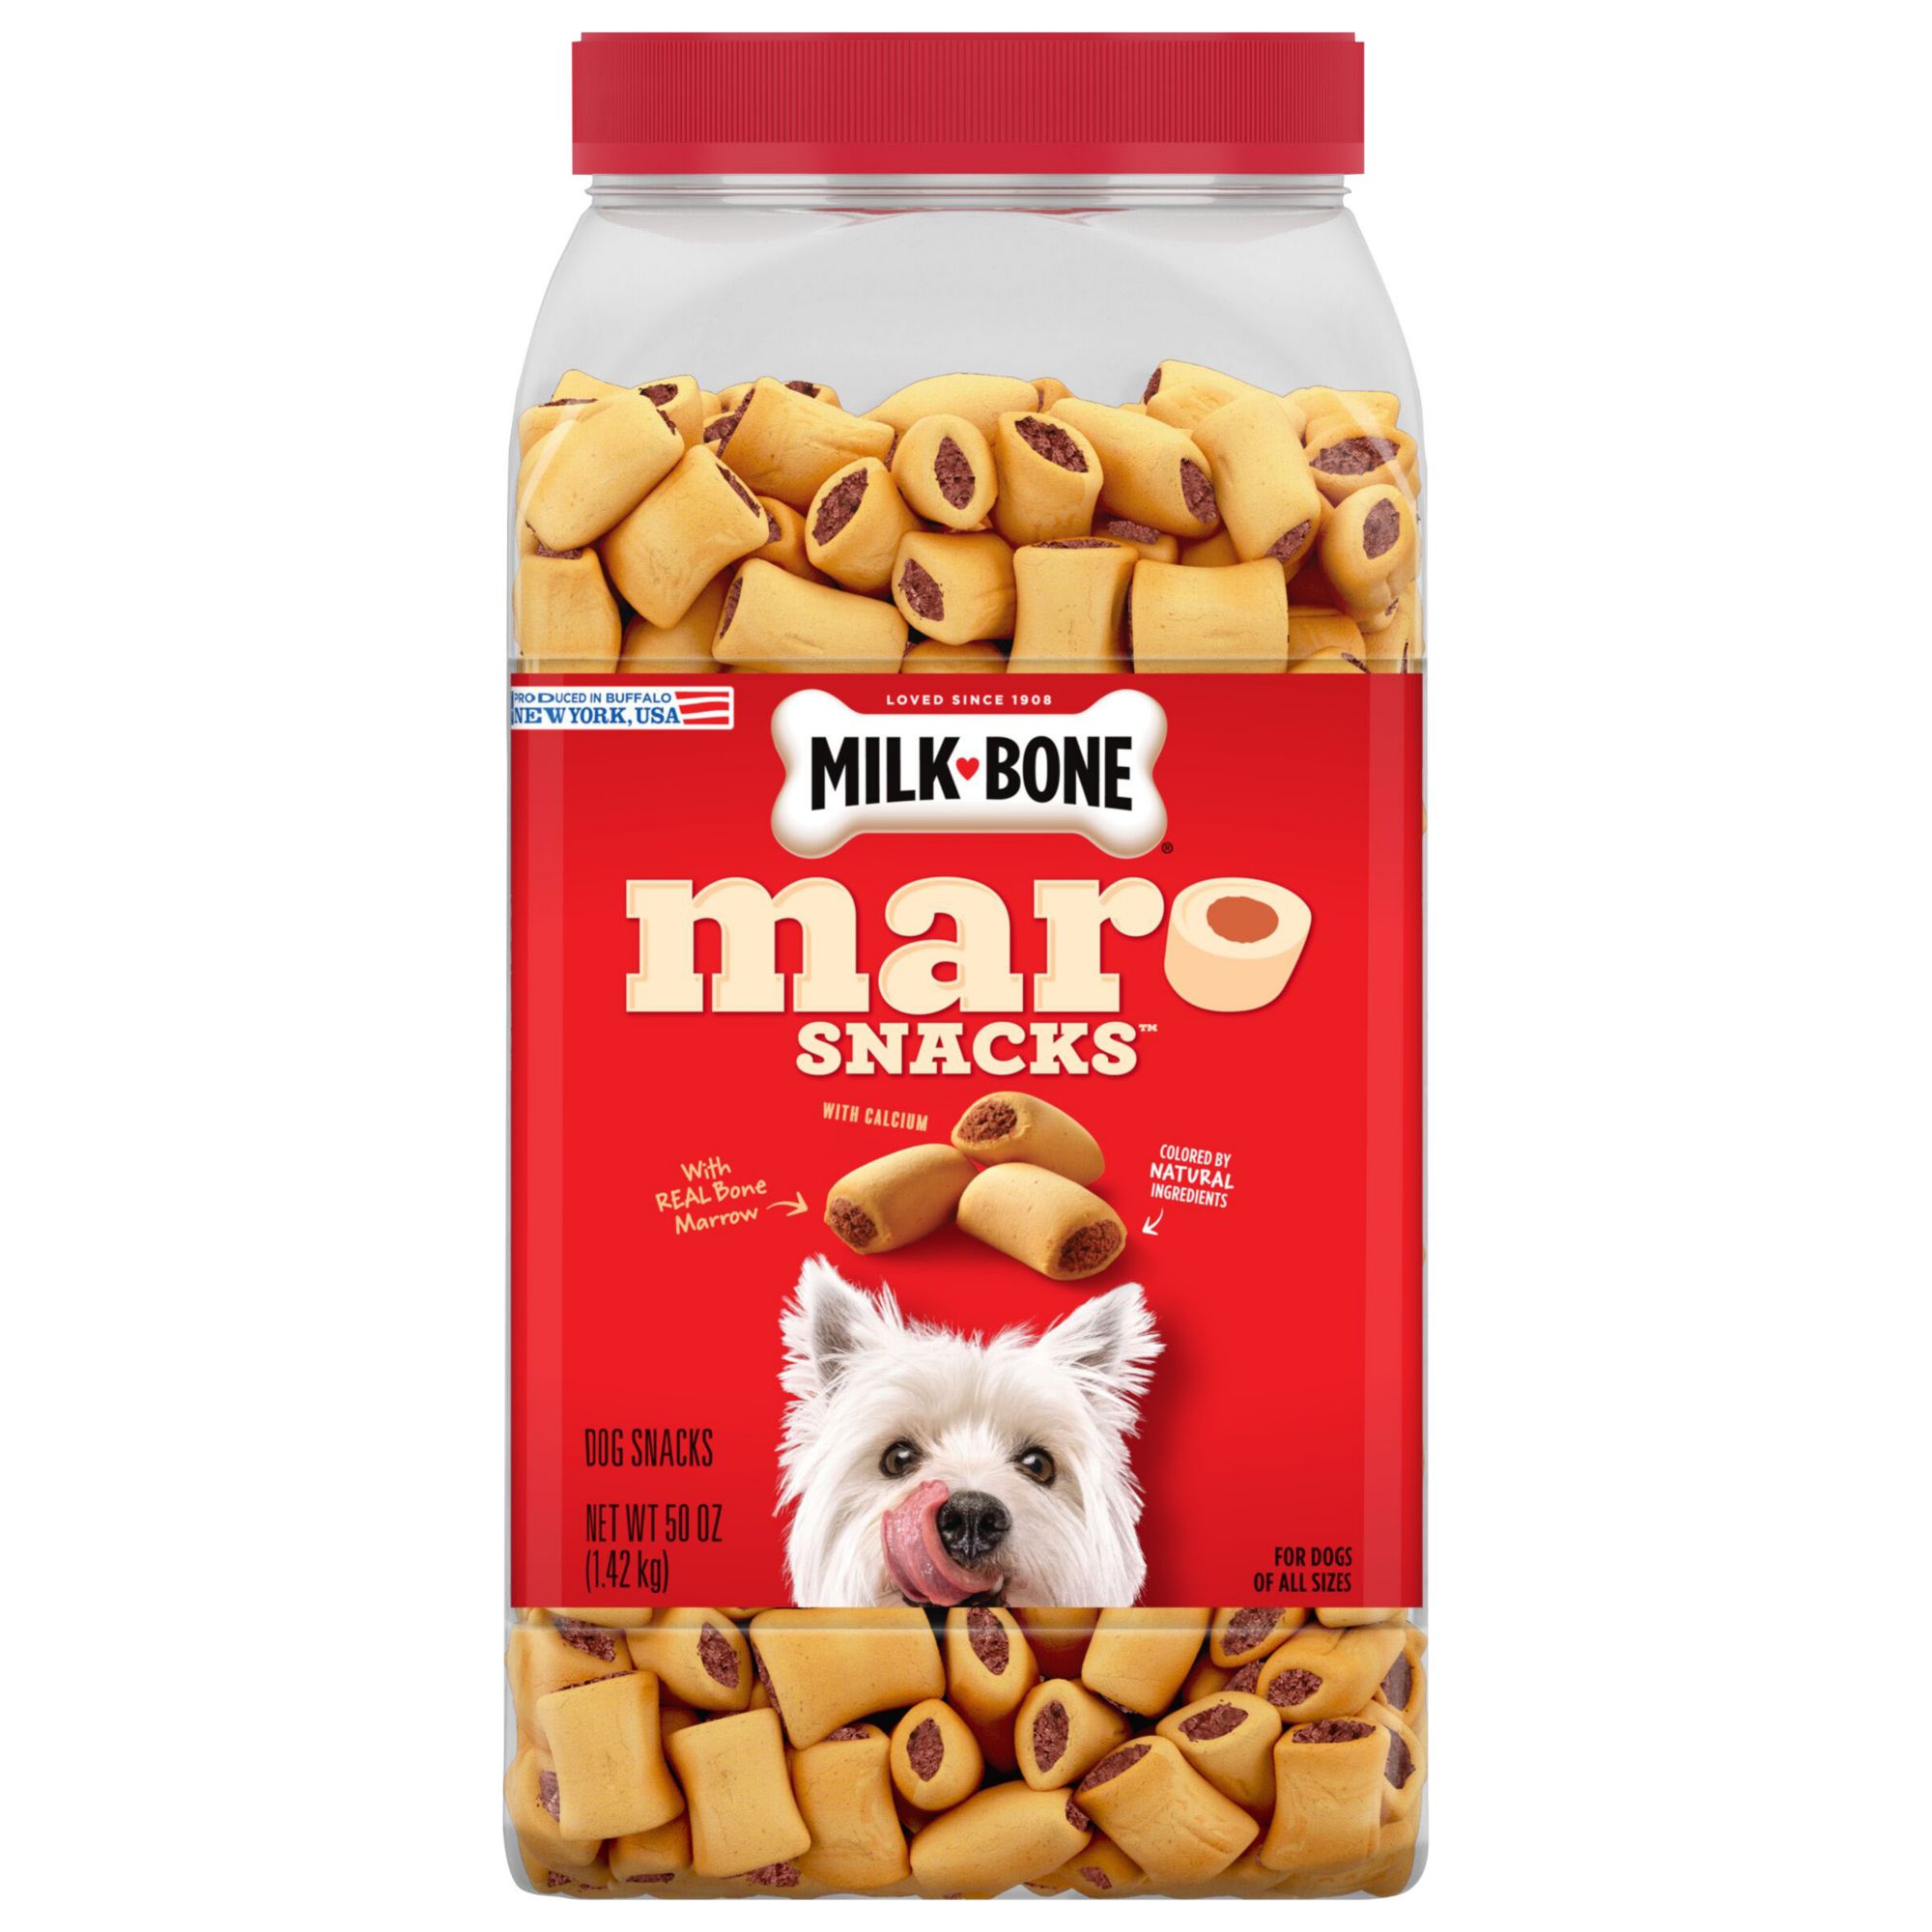 Milk-Bone MaroSnacks Small Dog Snacks, 50 oz.